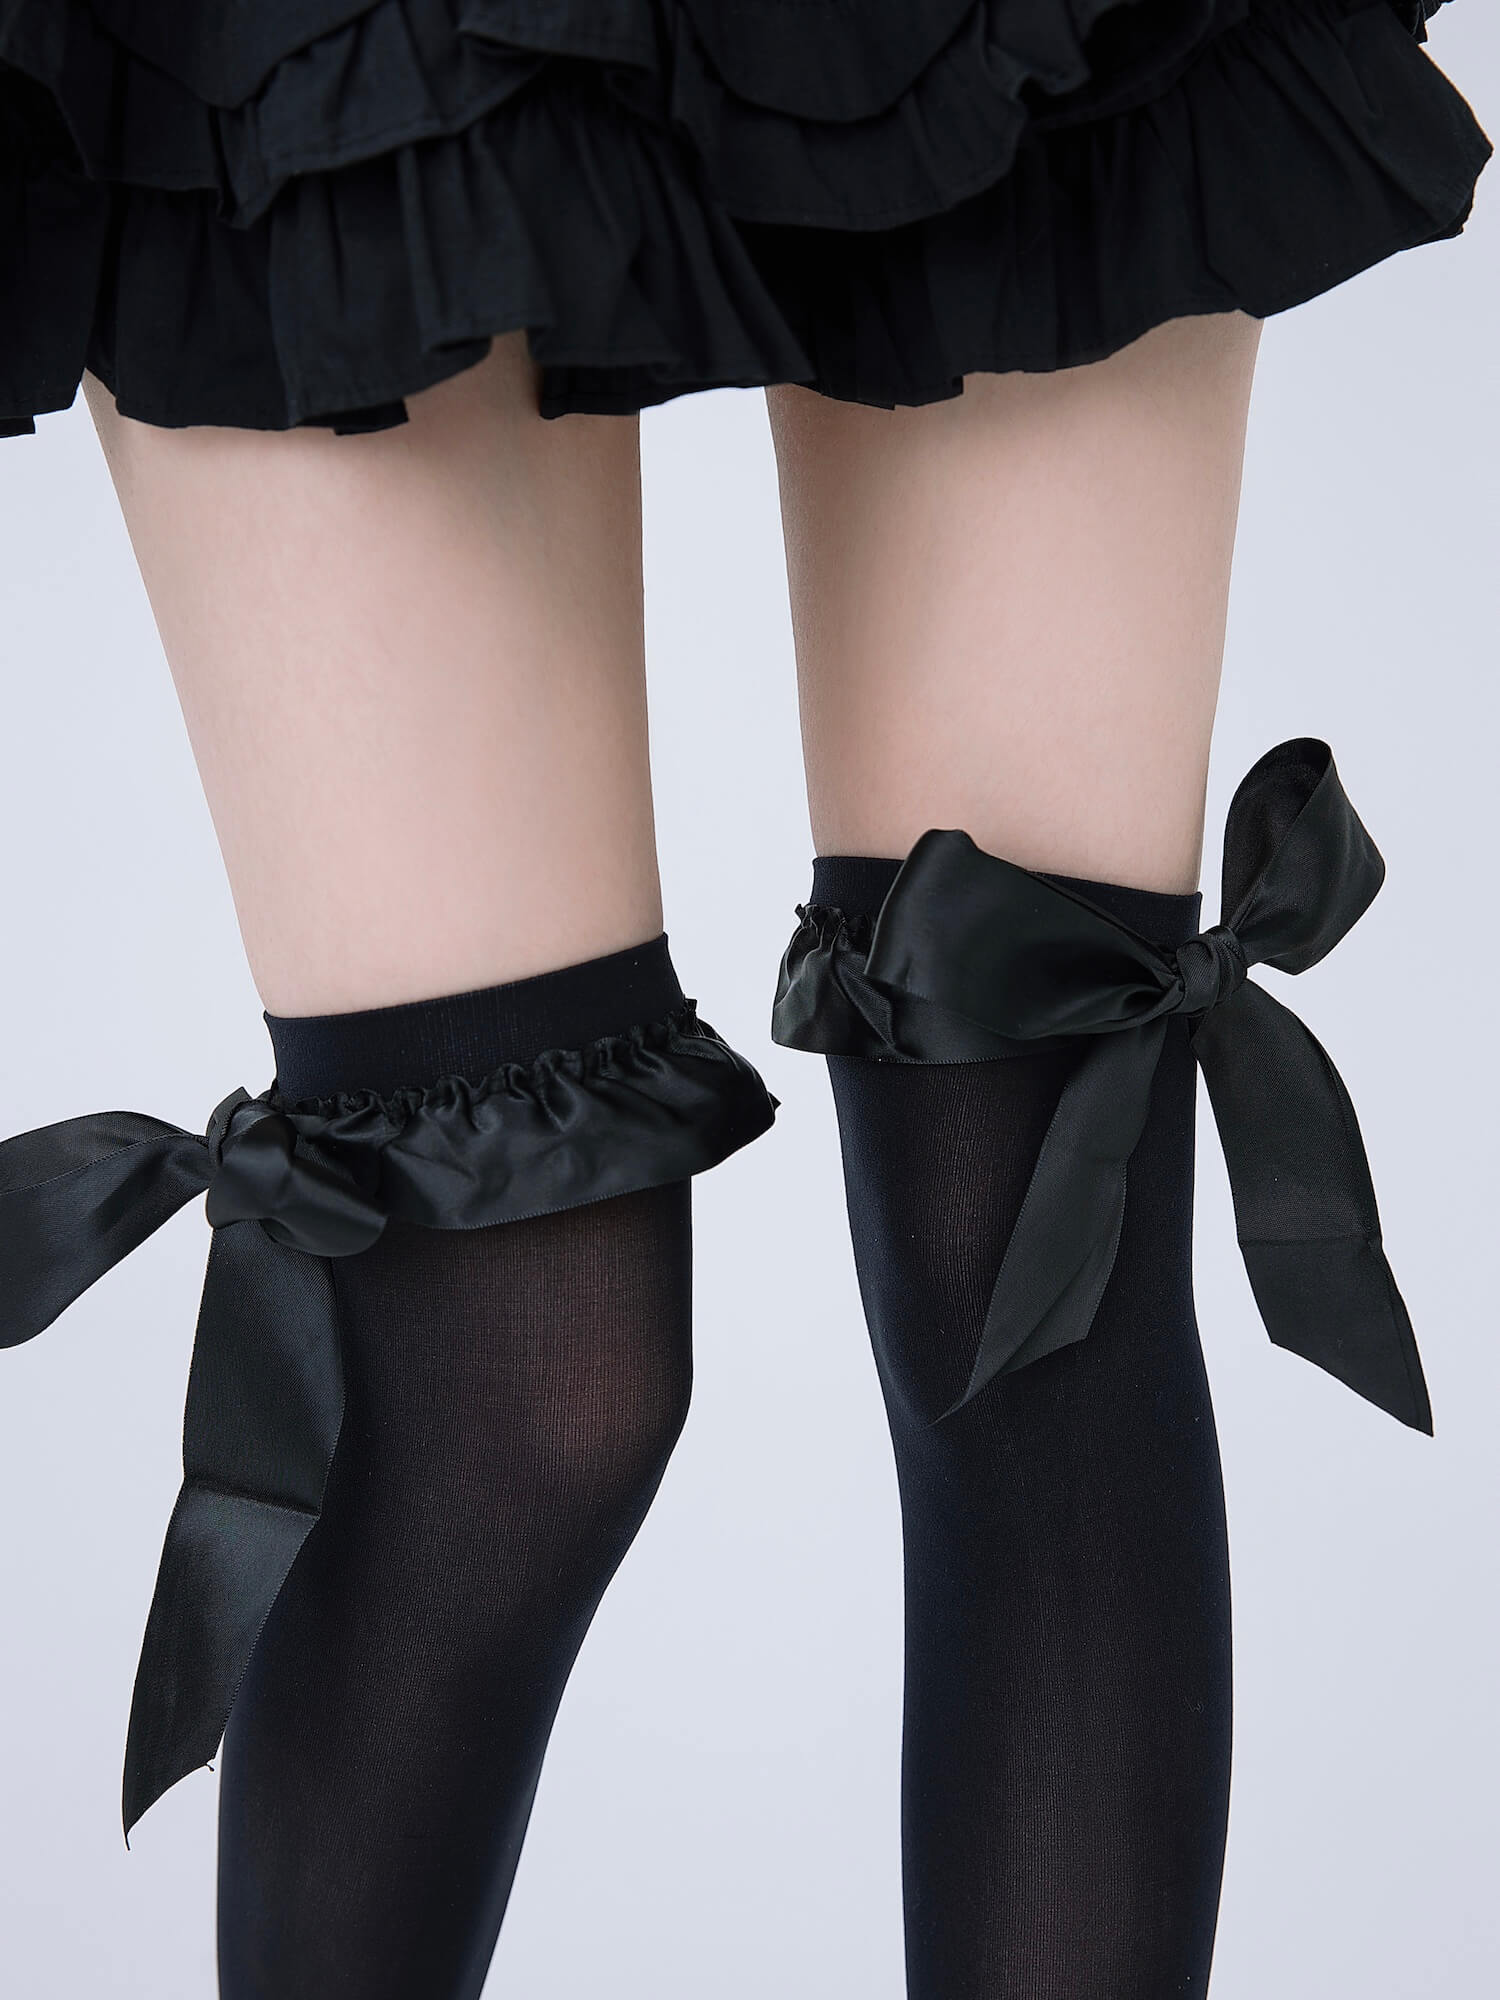 Lace over knee stockings – Cutiekill